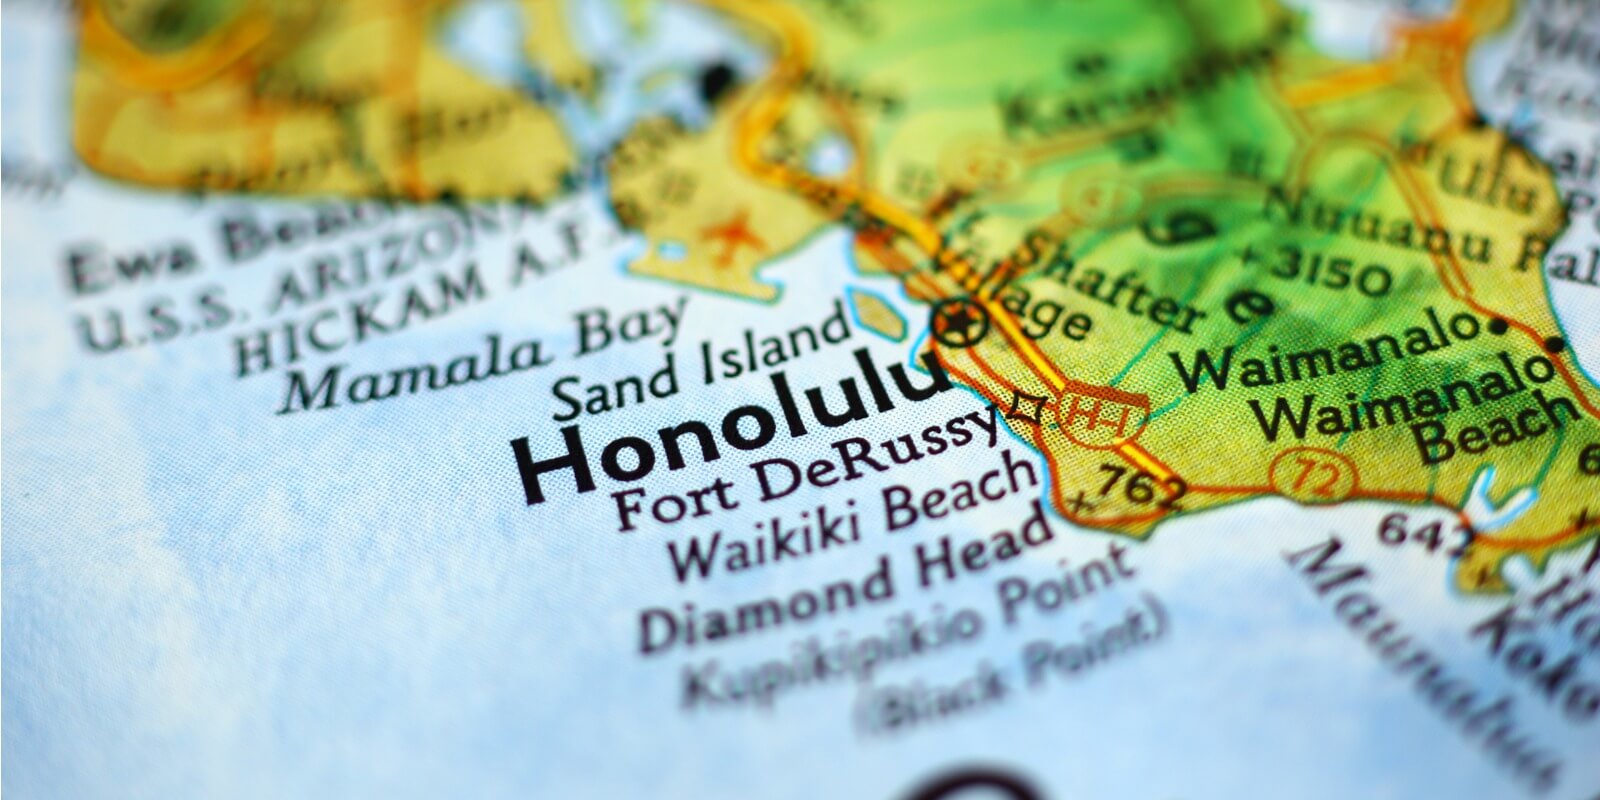 Honolulu Shown on a Map